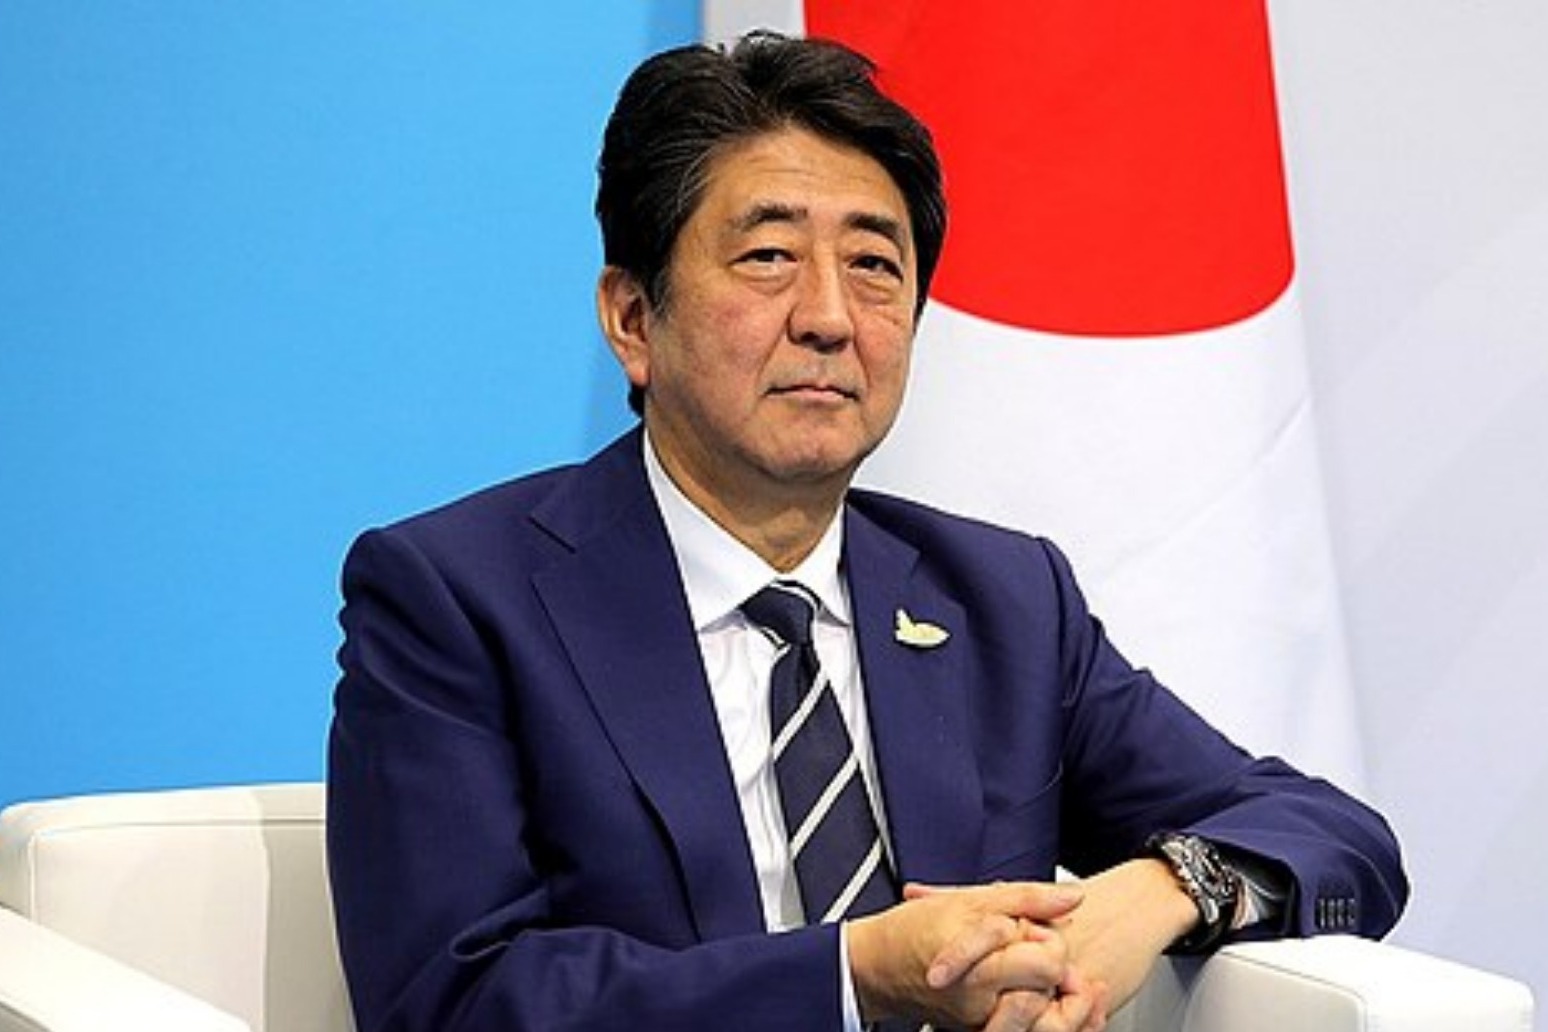 Japans former prime minister Shinzo Abe in hospital after being shot